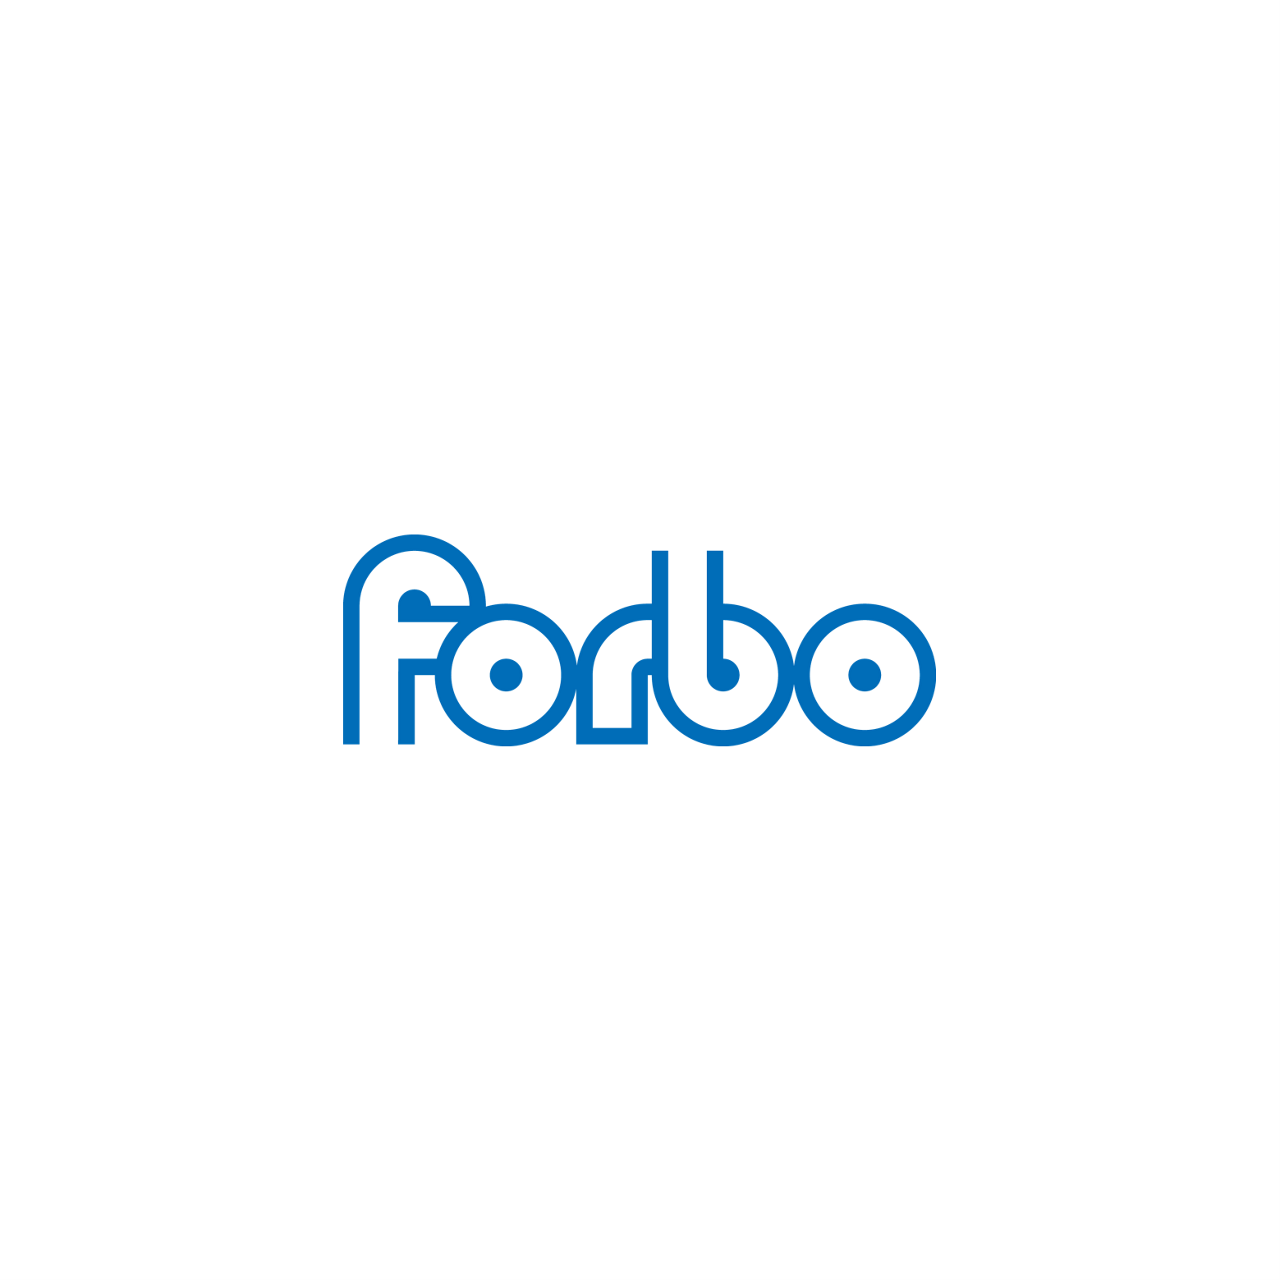 Logo Forbo